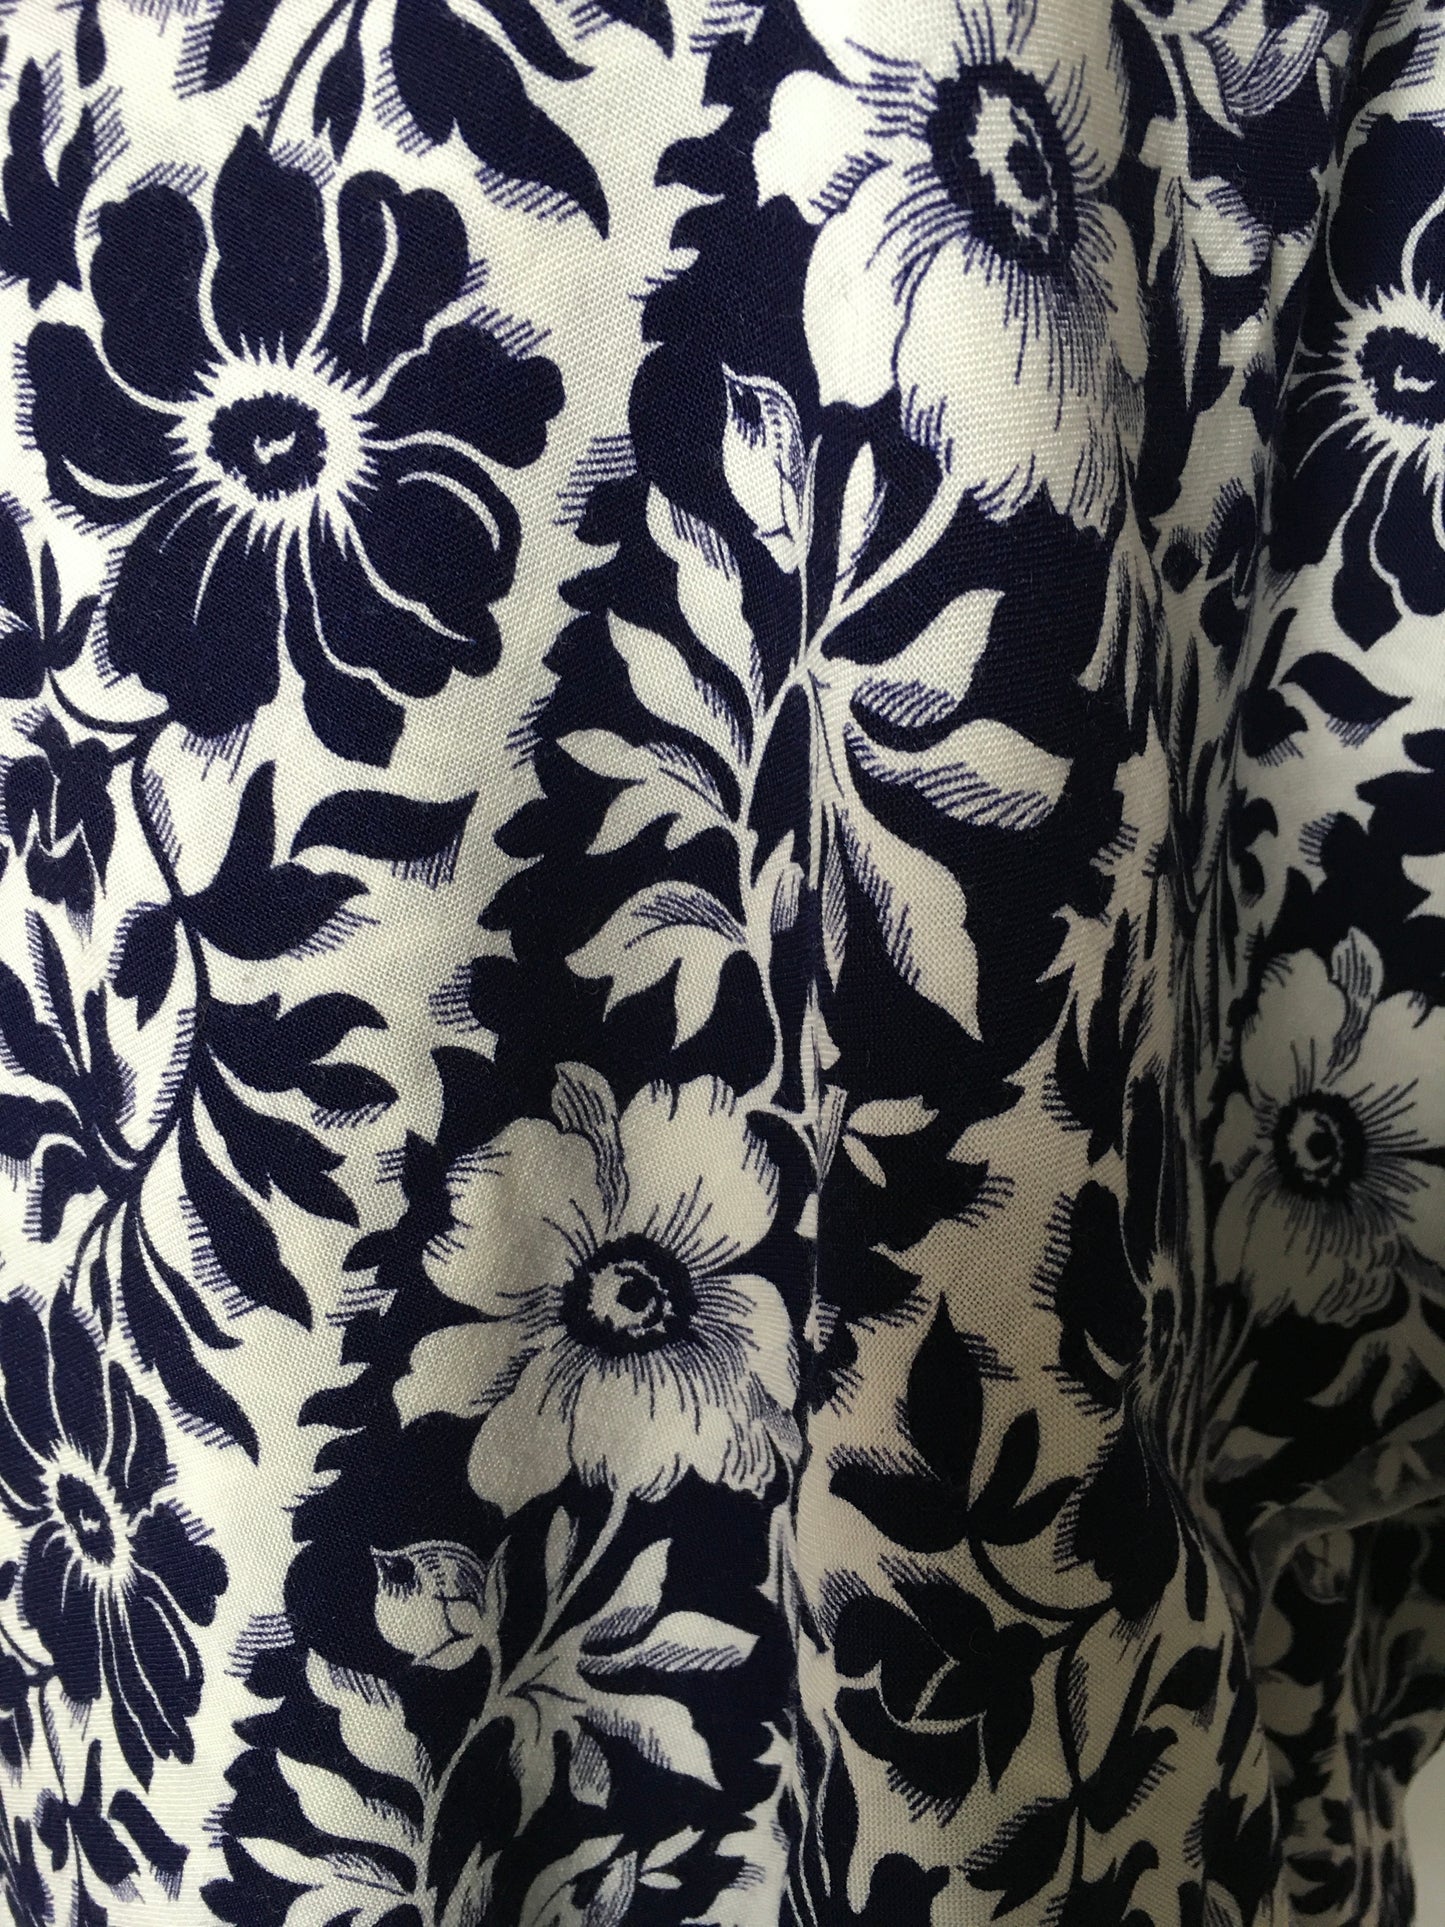 Original 1940’s Moygoshal Linen Dress Fabric - Suspected CC41 due to iconic floral Design - 3.5m